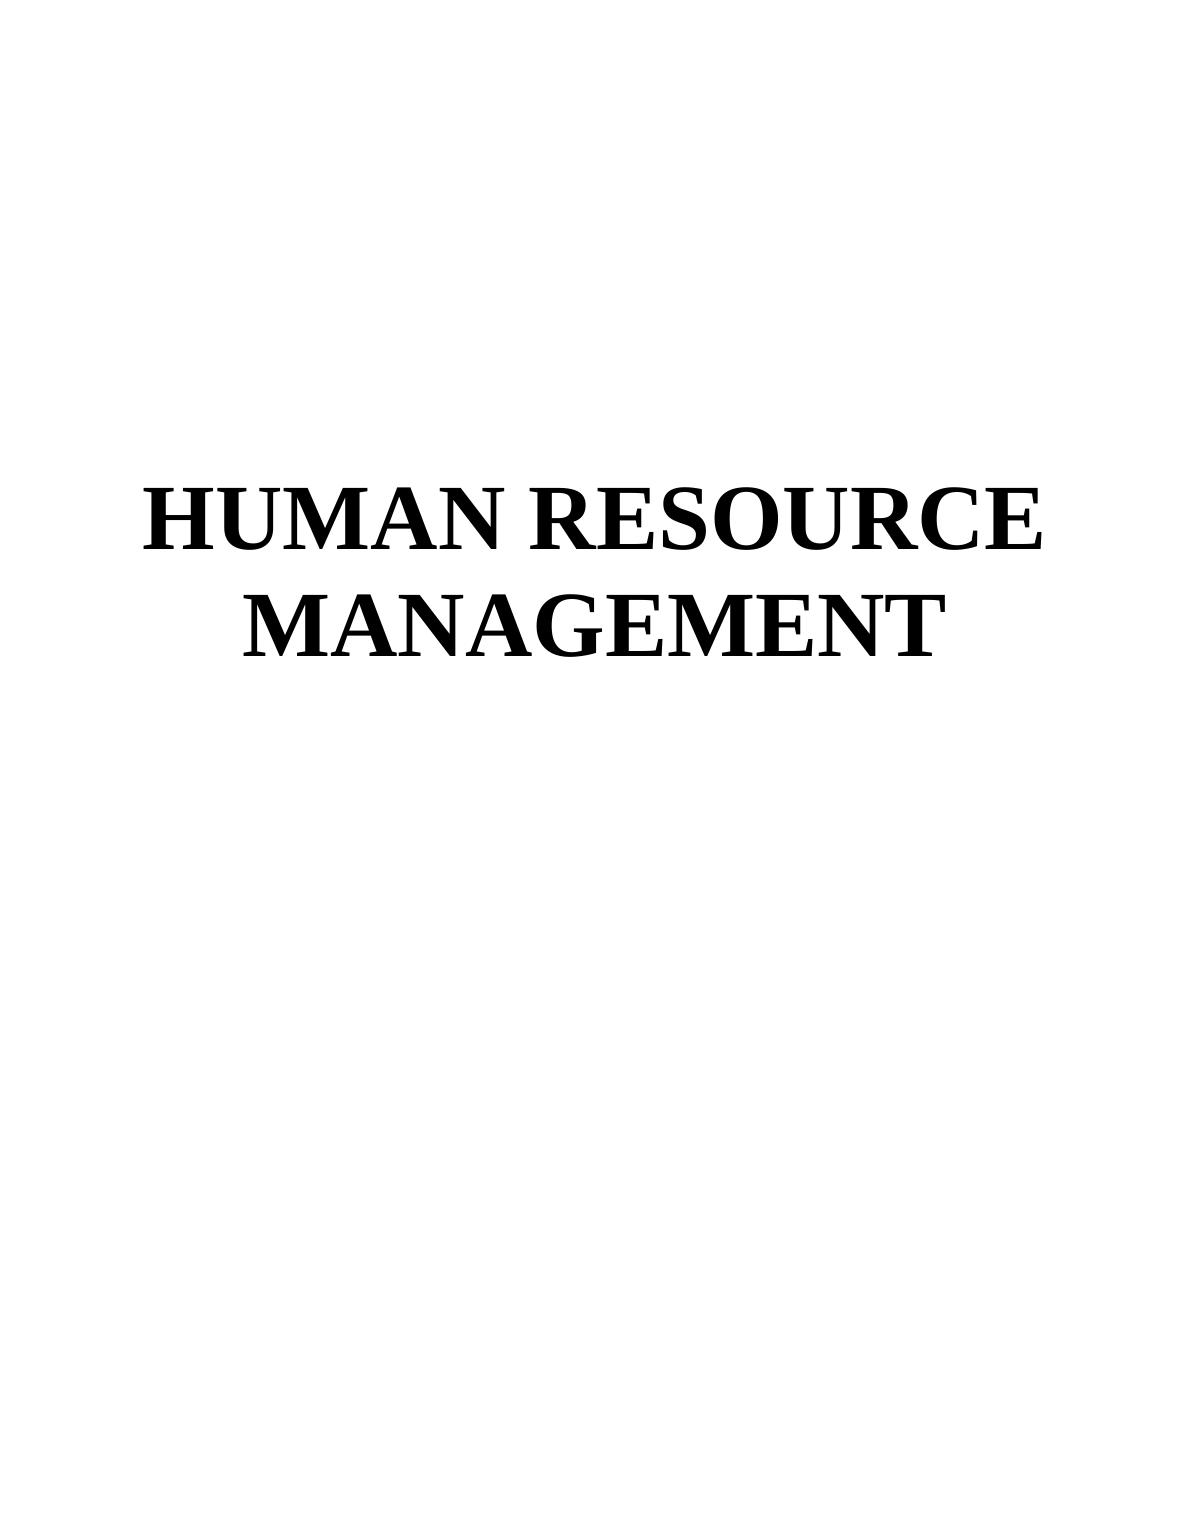 Human Resource Management (HRM) Assignment - Sainsbury_1